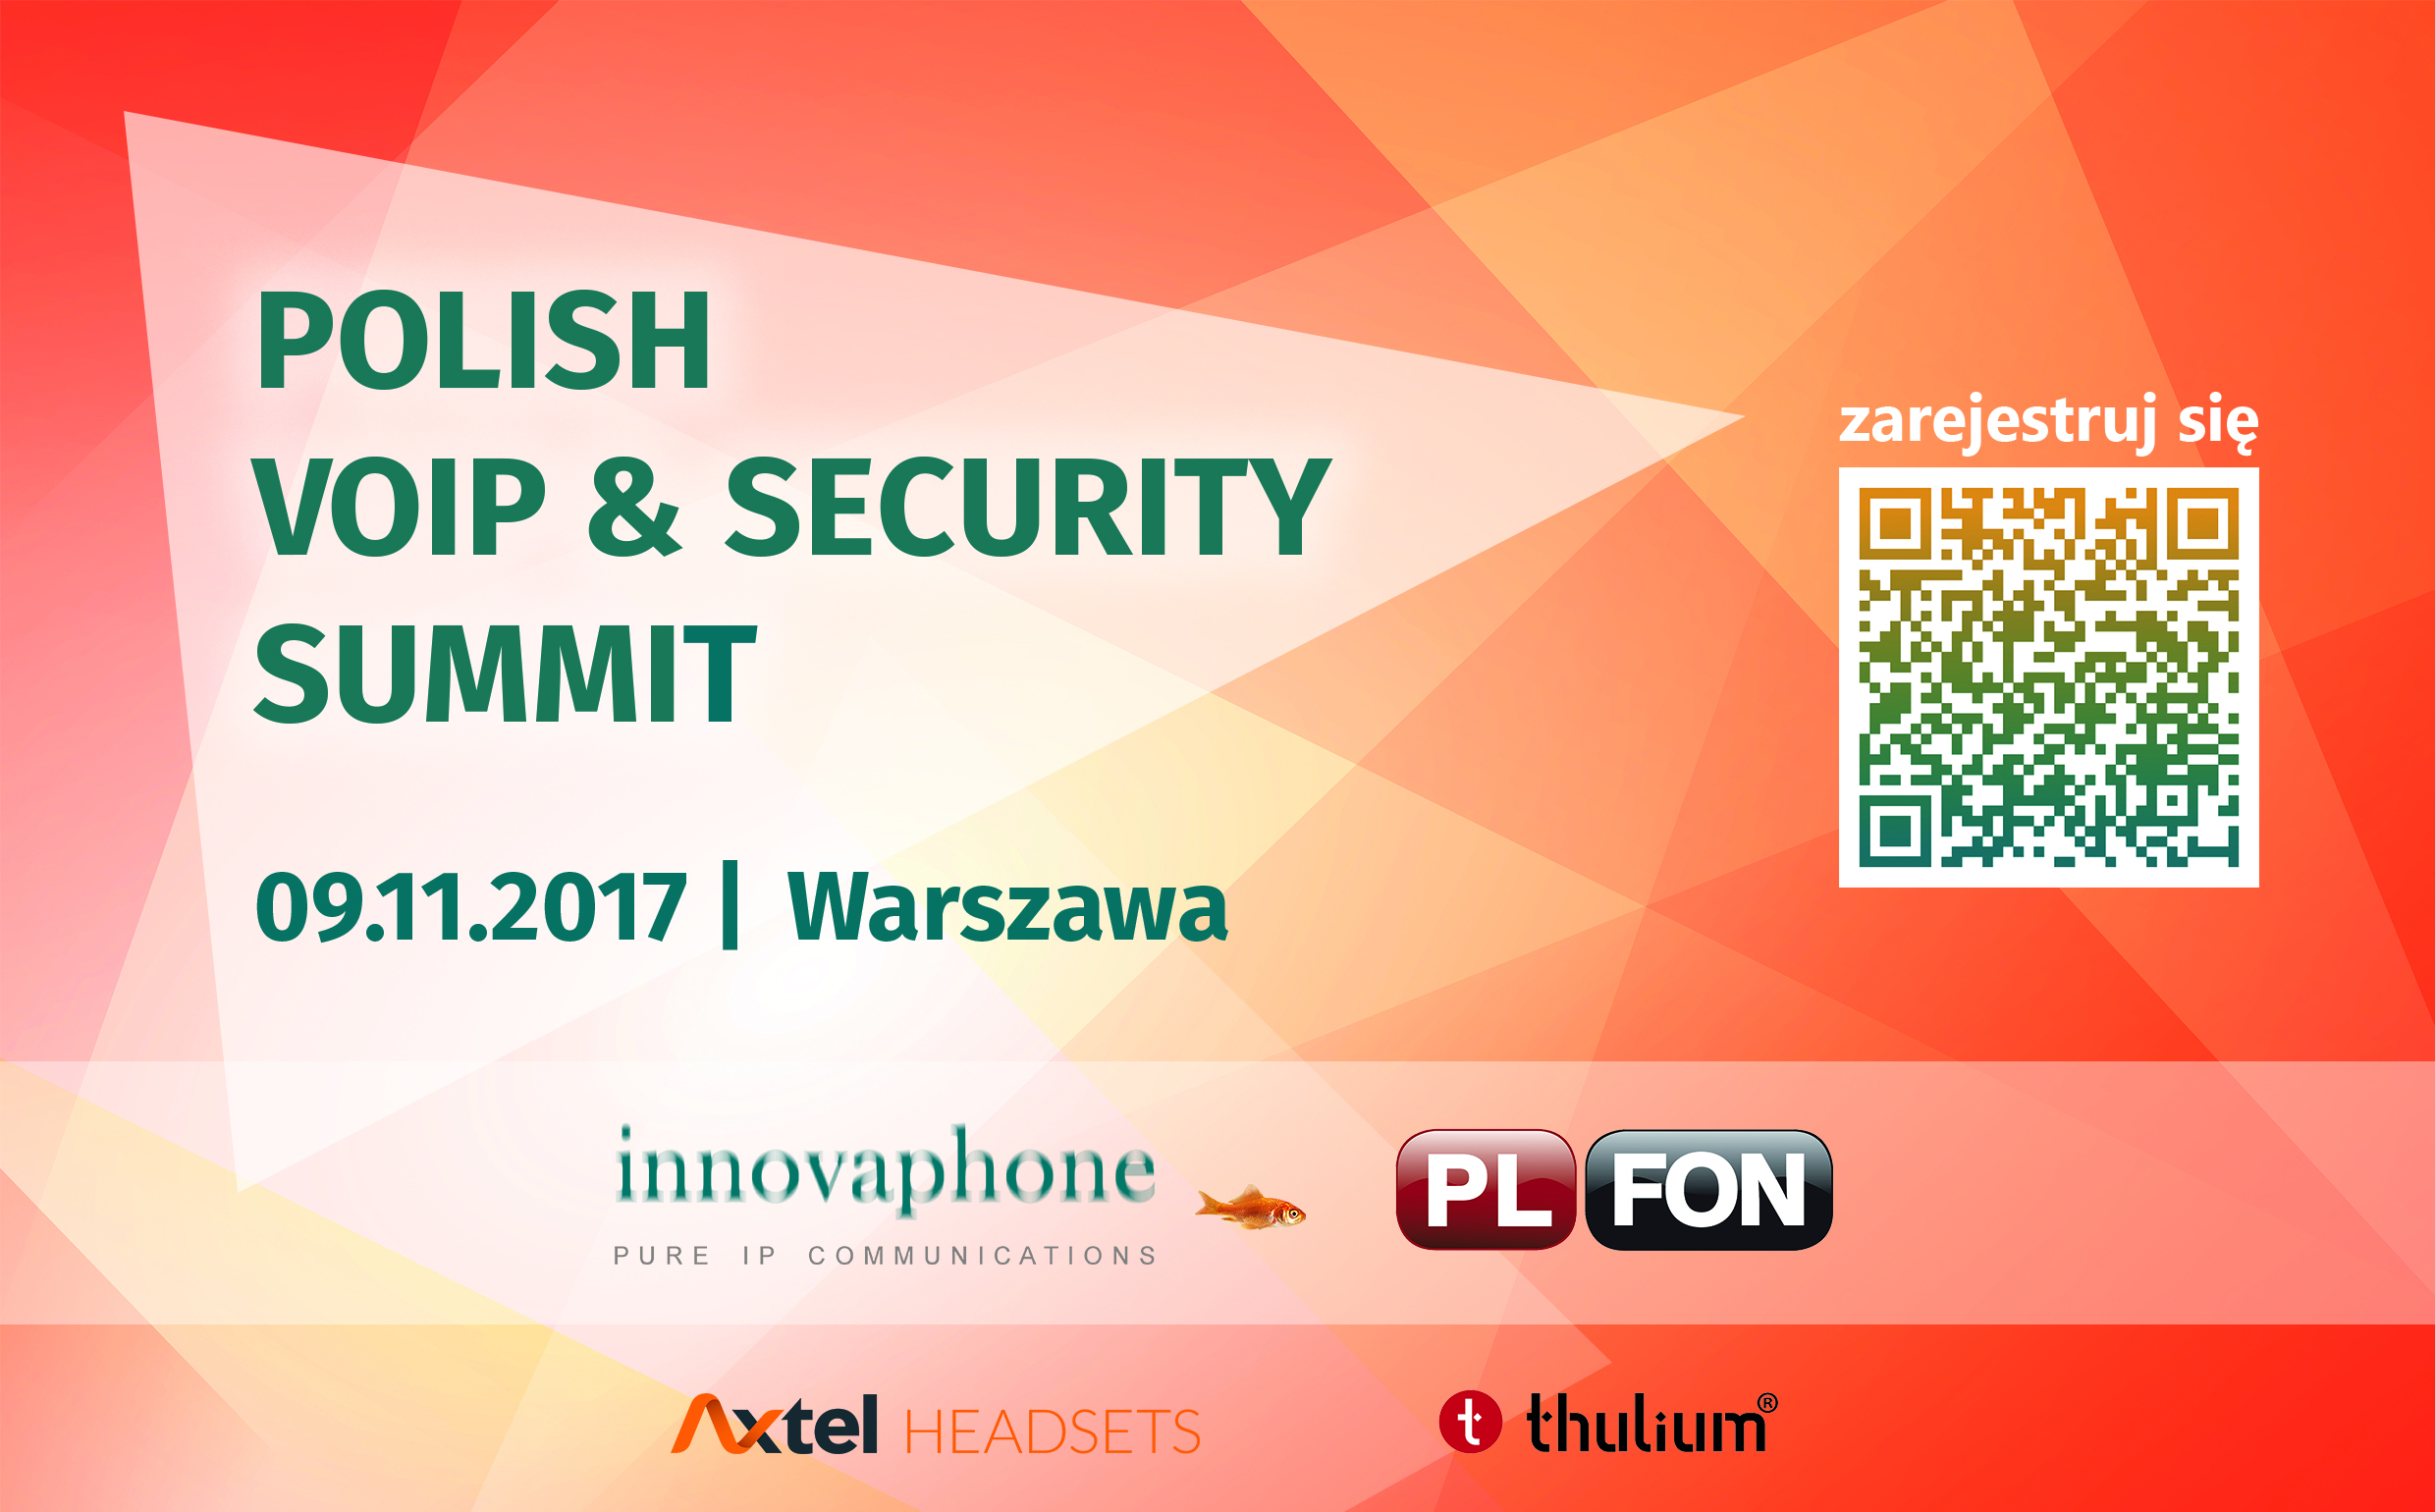 Polish VoIP & Security Summit